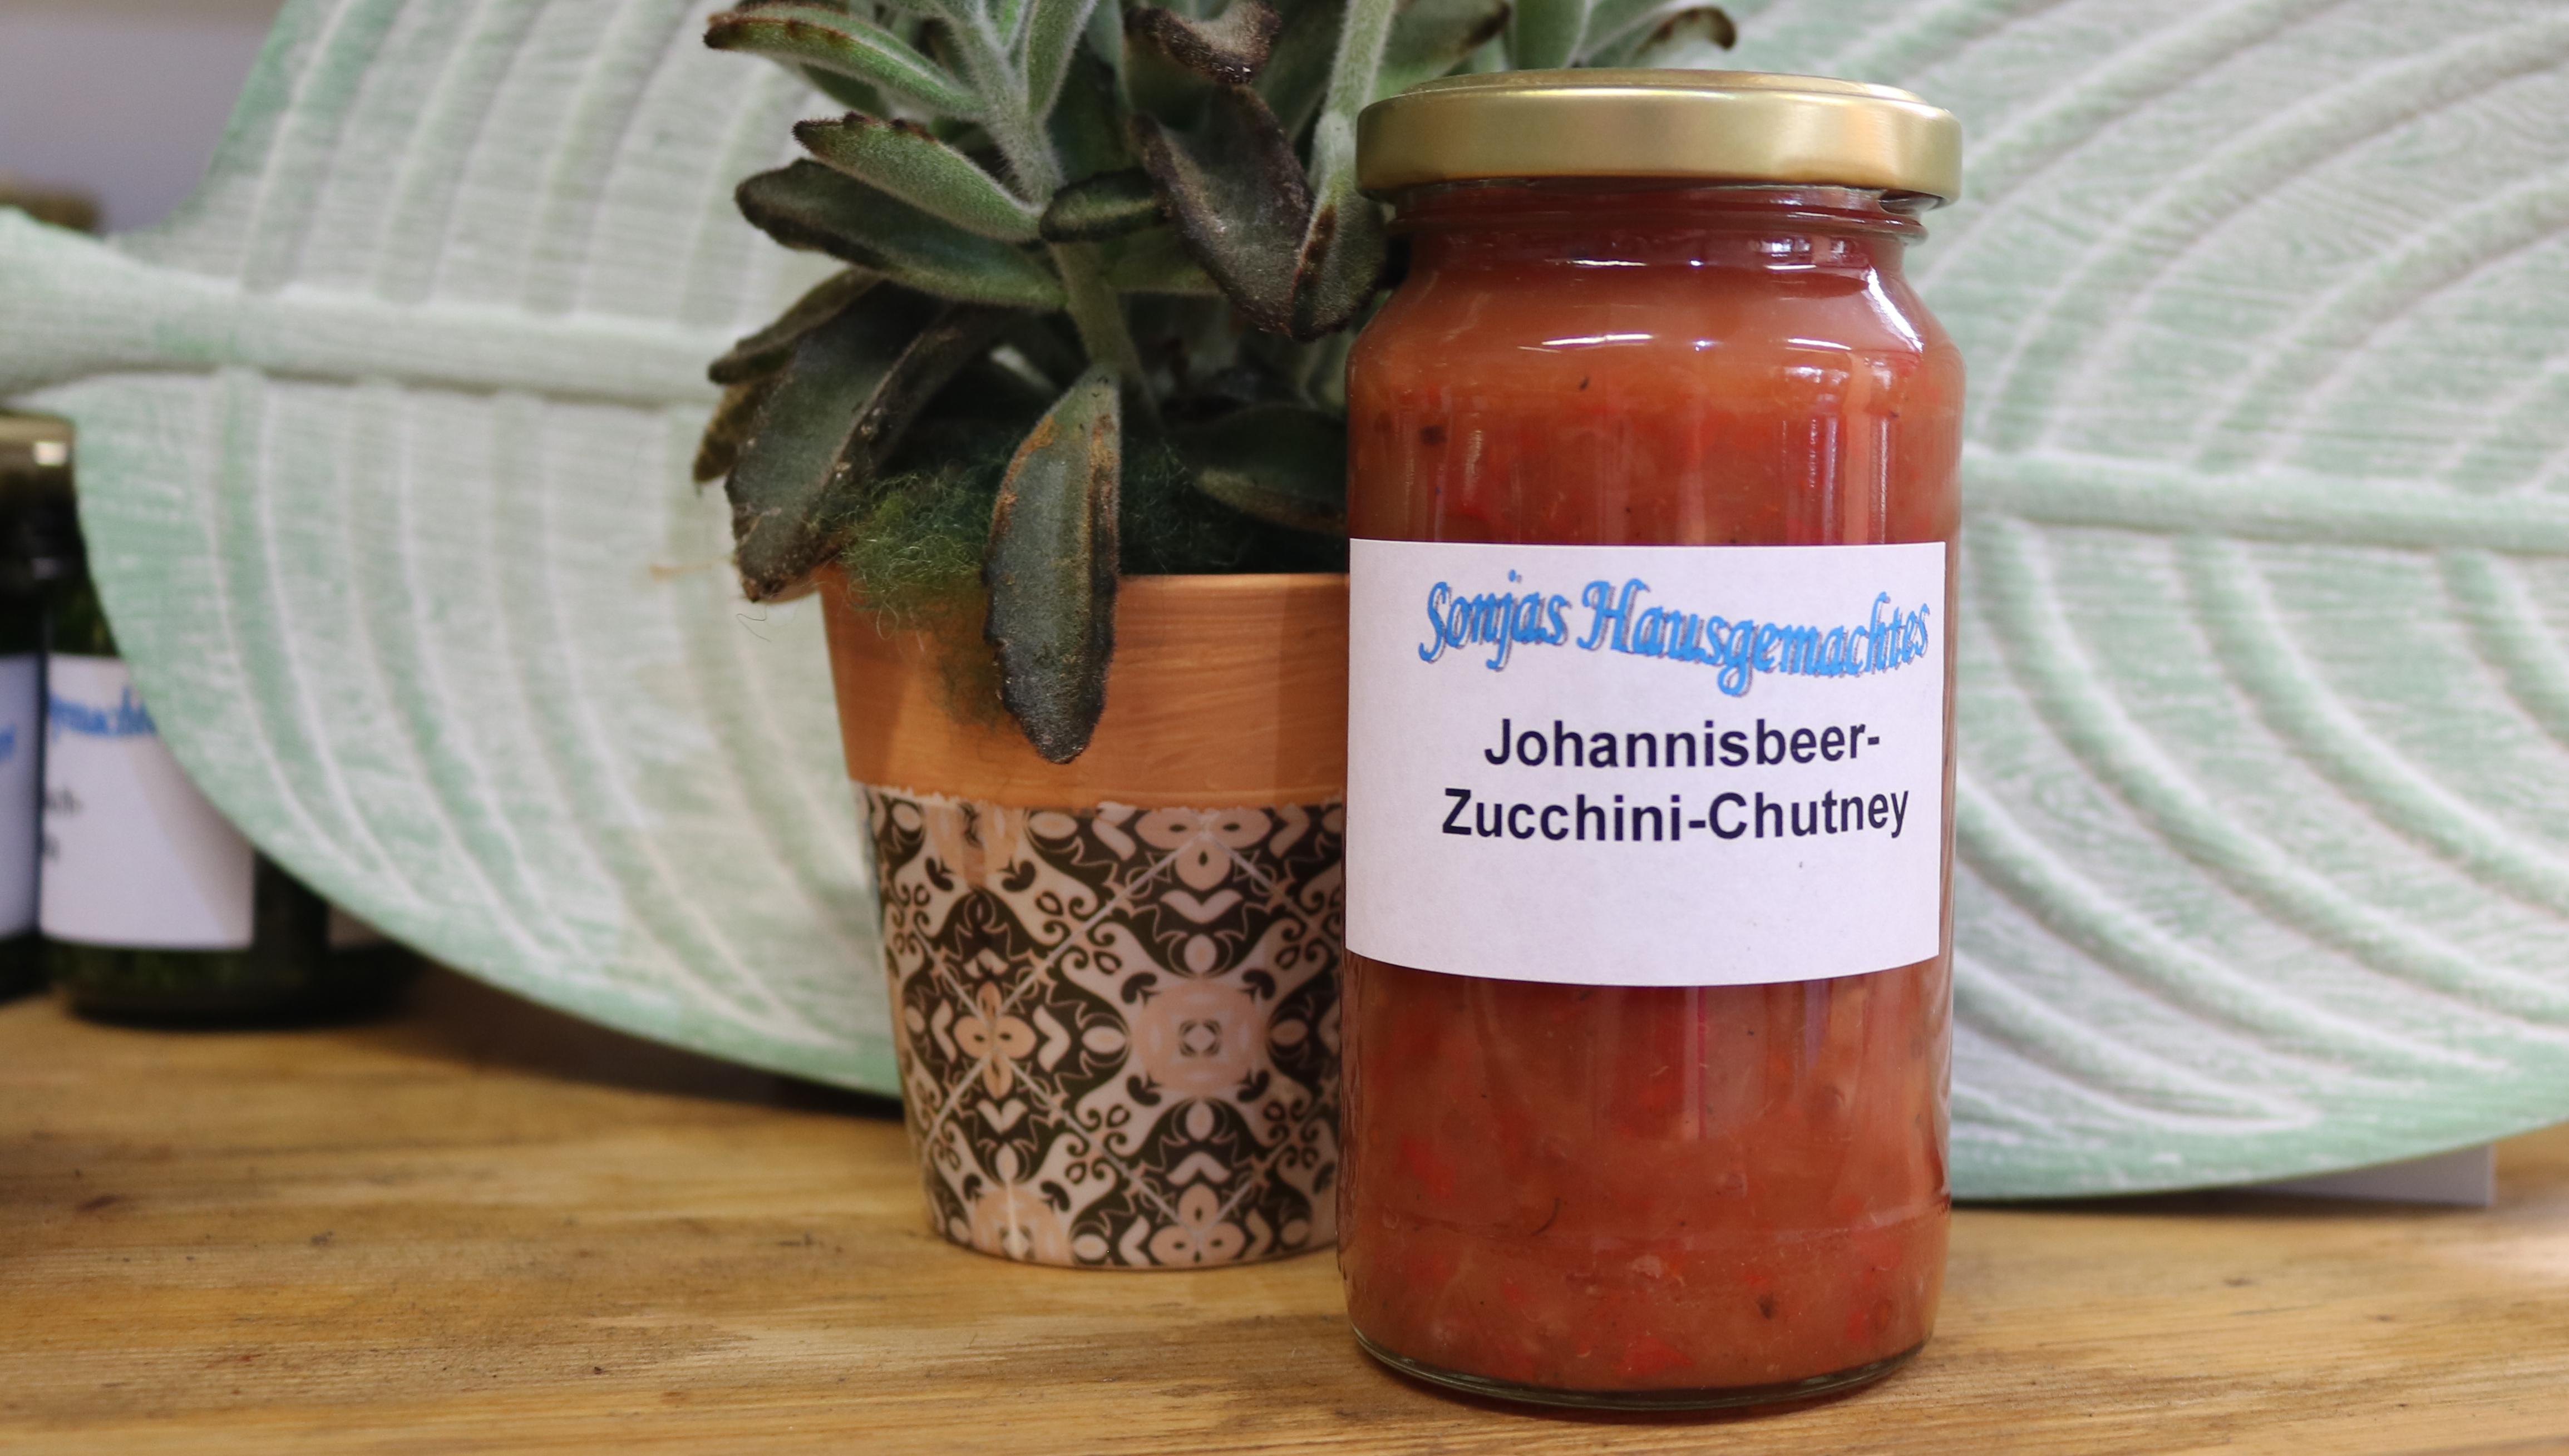 Johannisbeer-Zucchini-Chutney